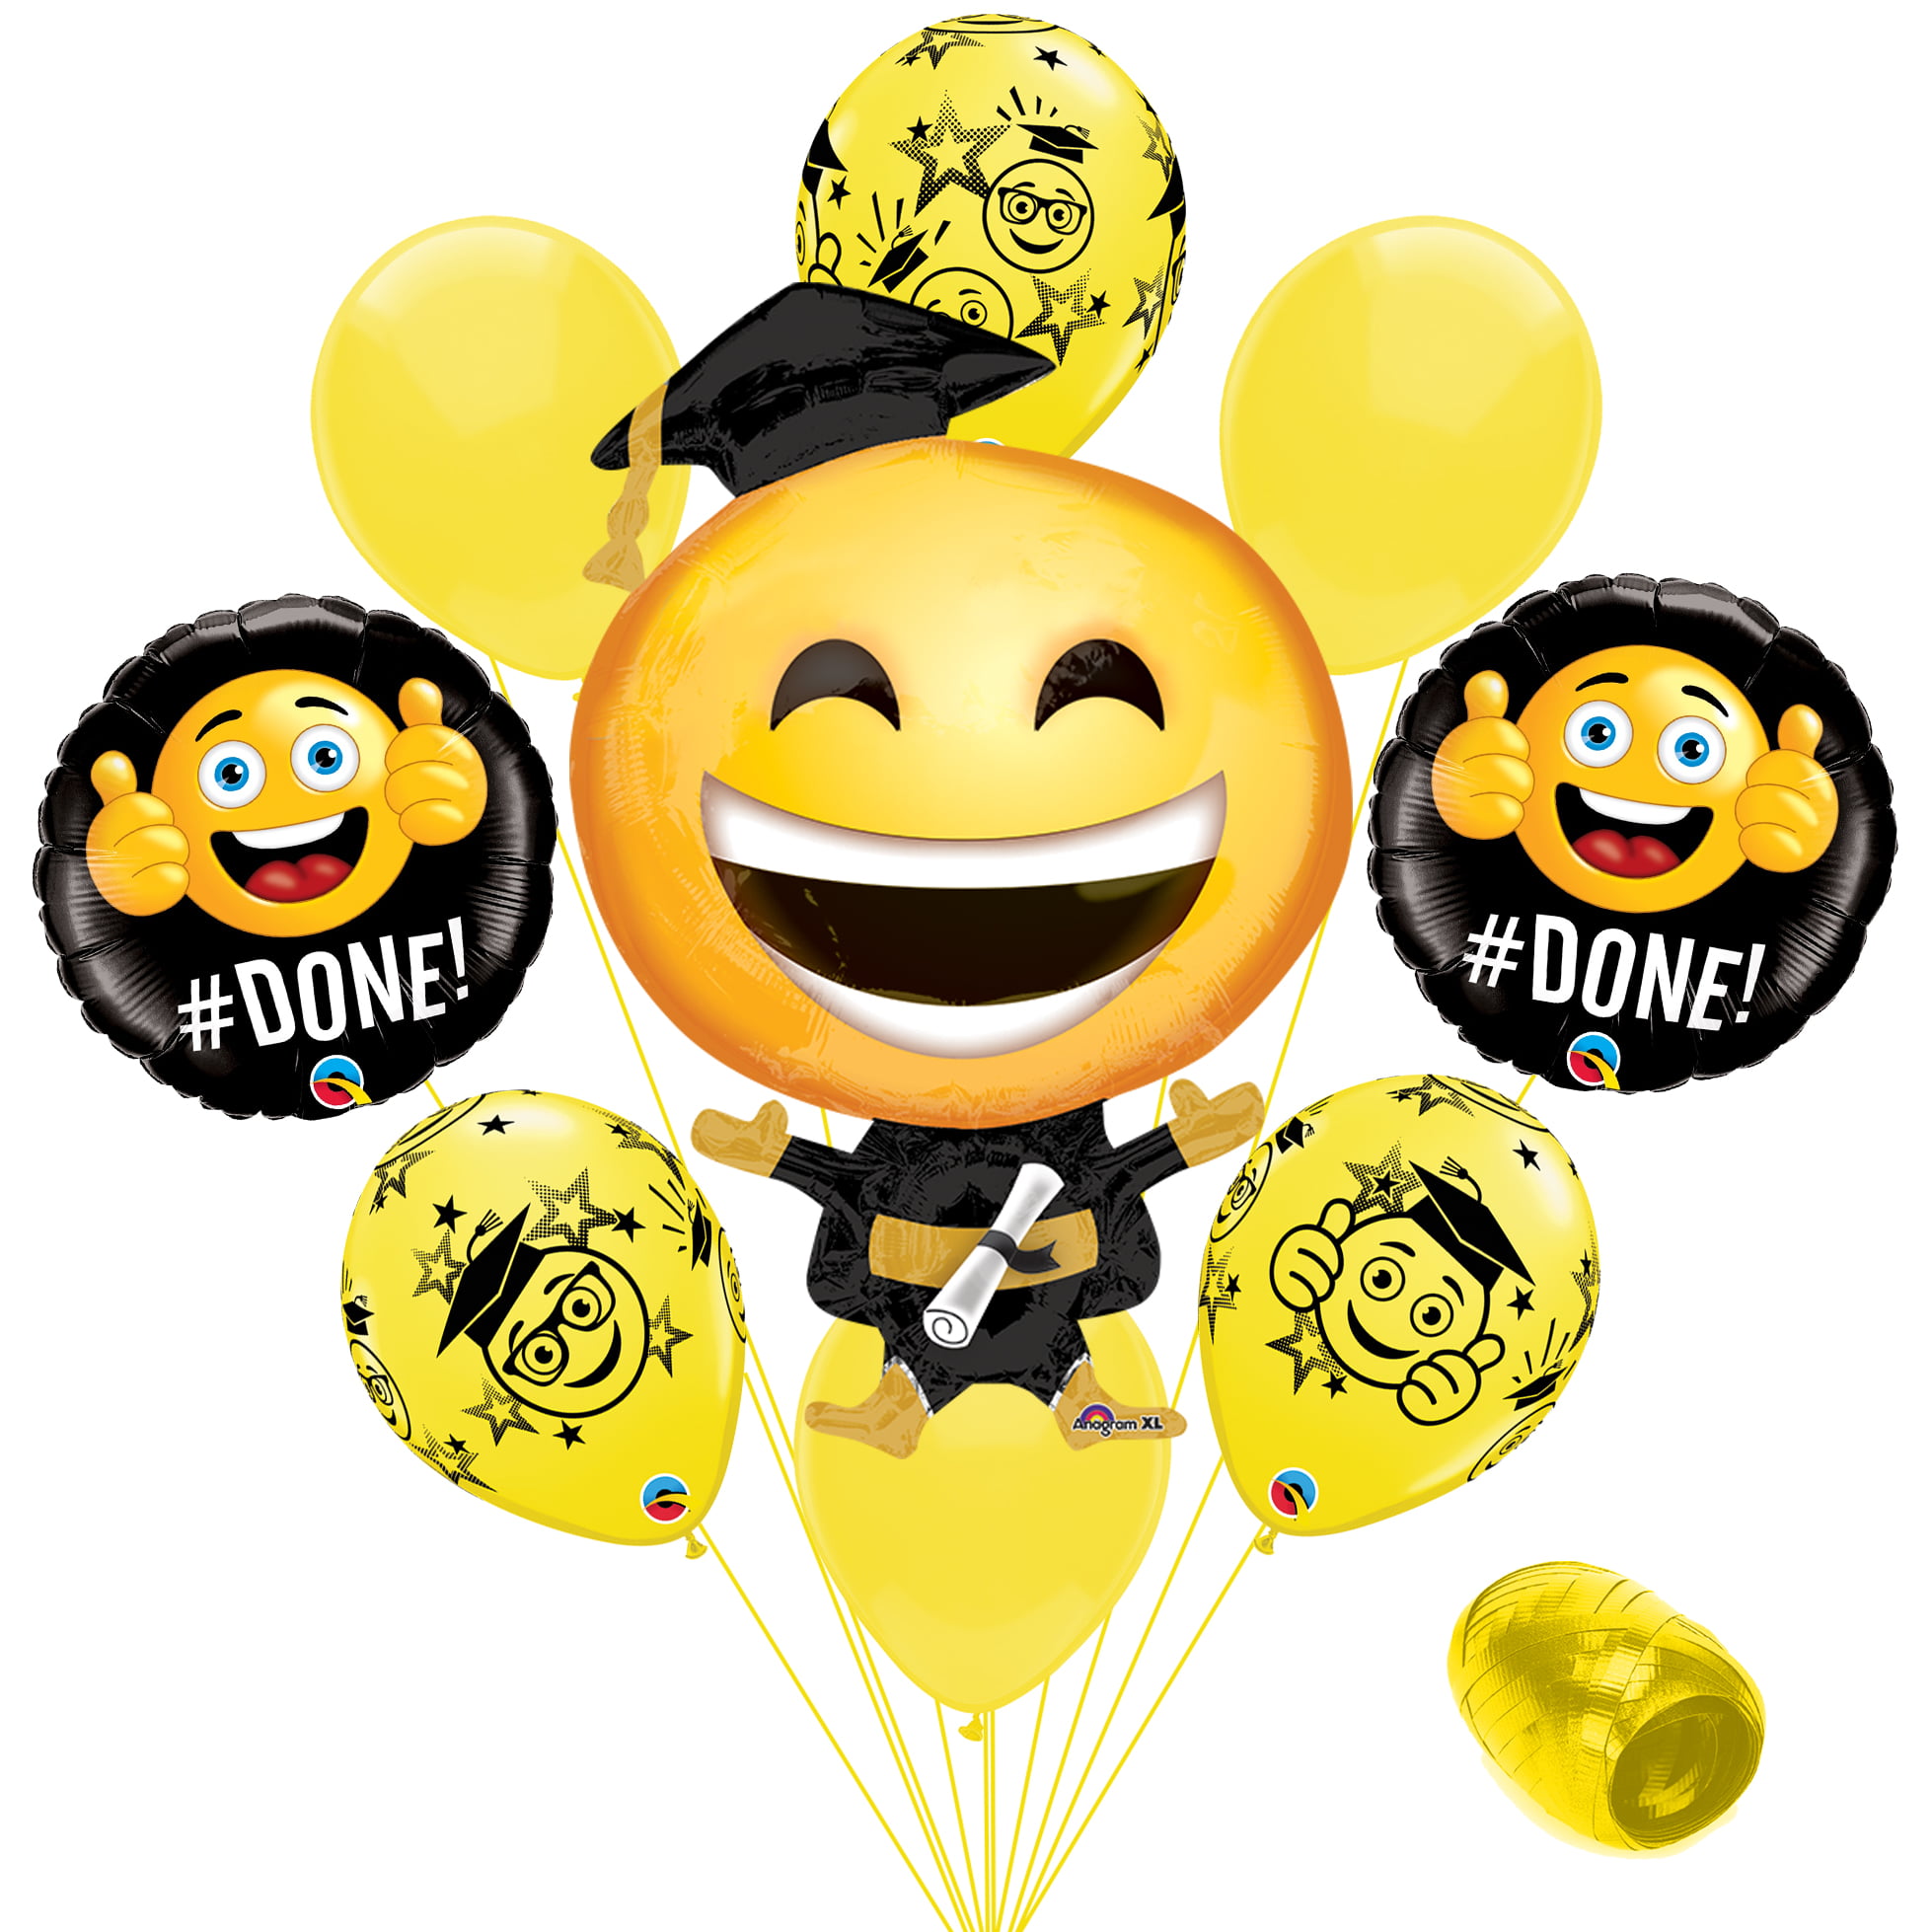 Details about 7 pc Emoji Happy Graduation Balloon Bouquet Congratulations  Congrats Grad Smiley Party Supplies Home & Garden Party Balloons